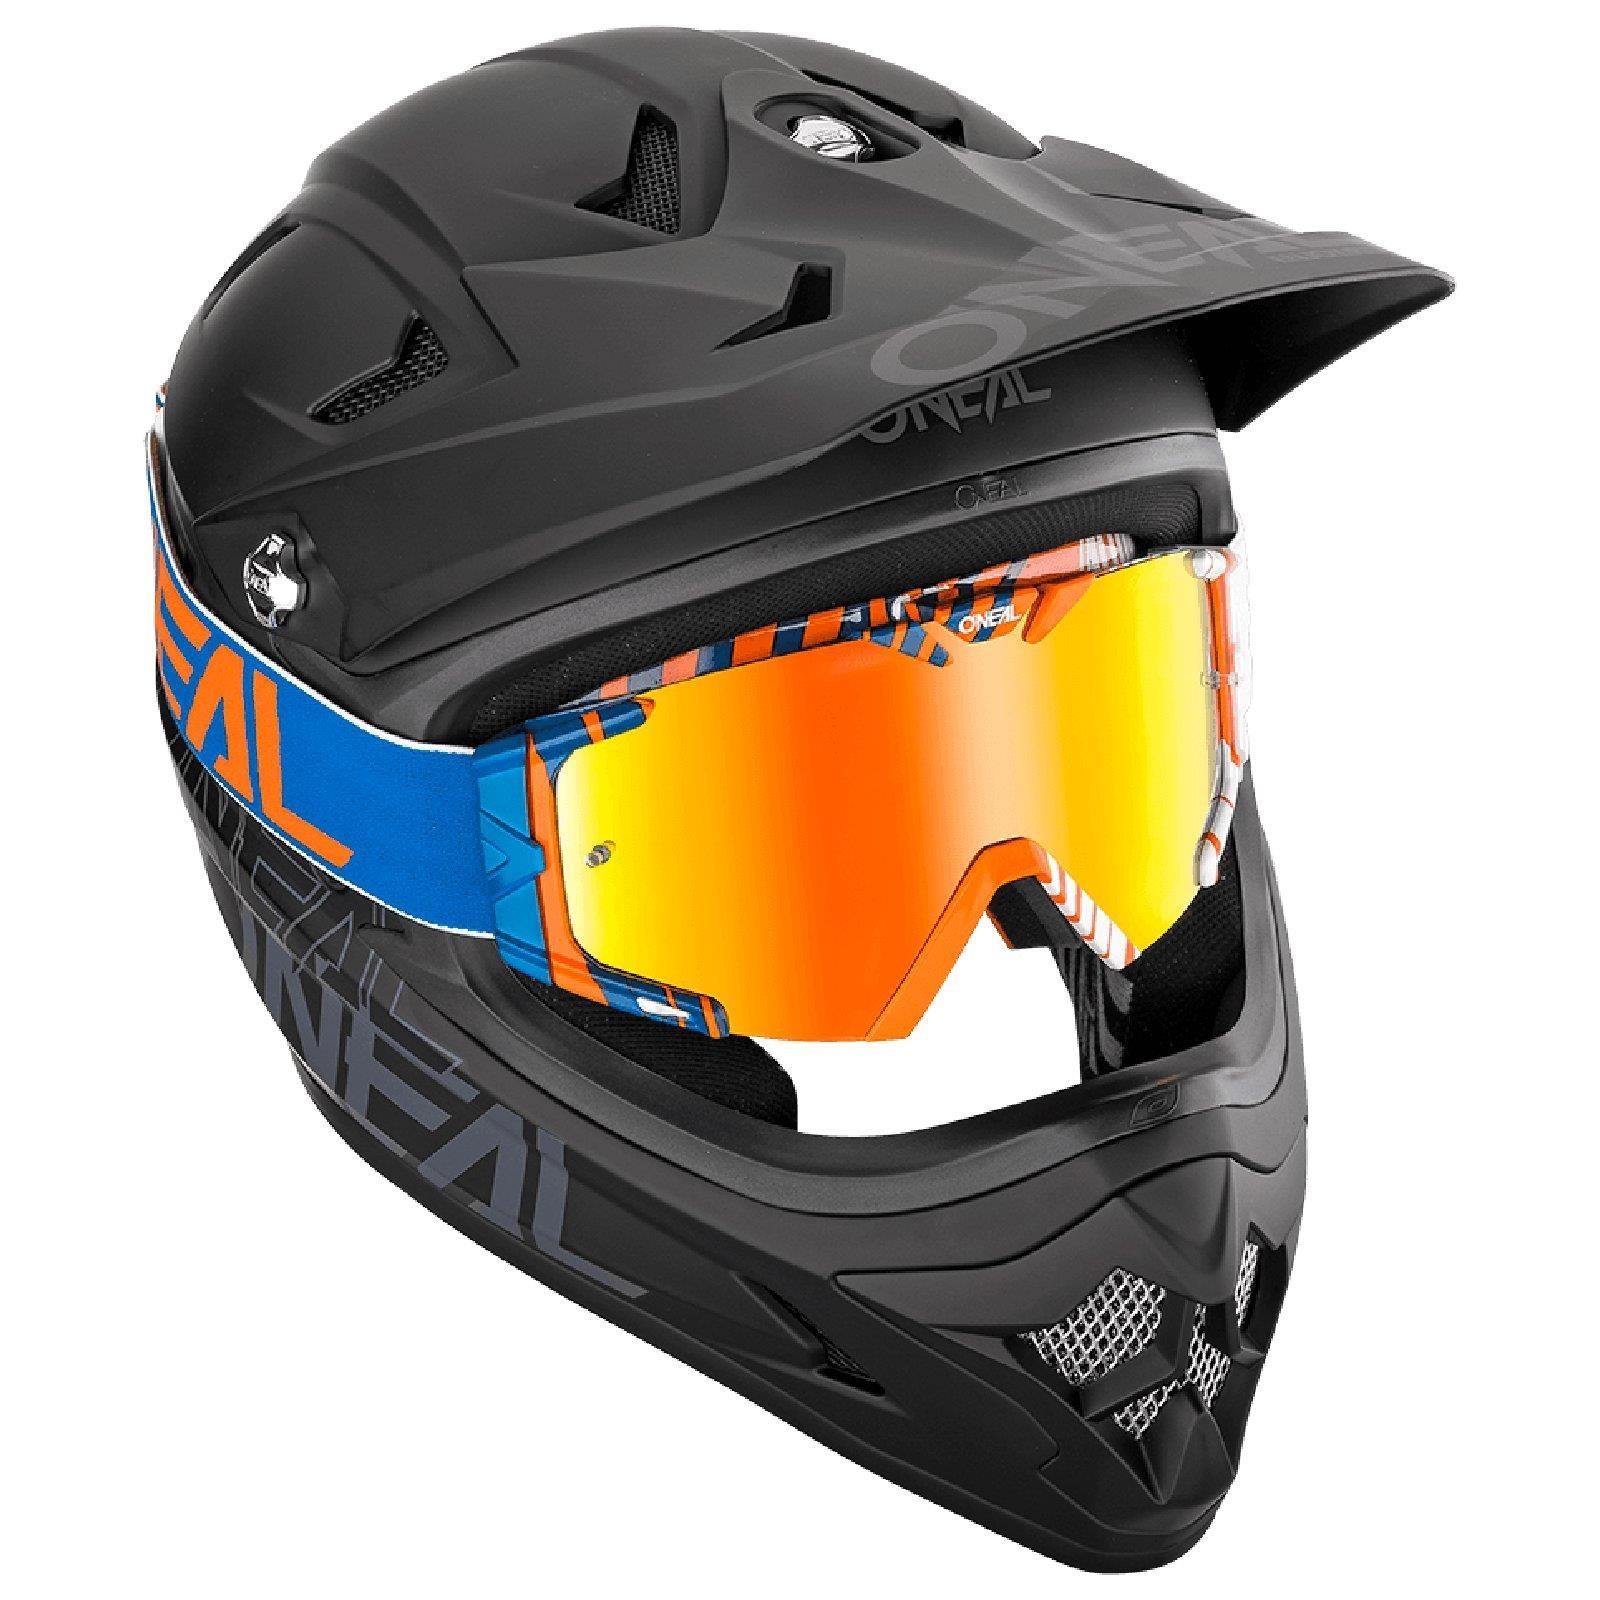 Oneal MX Crossbrille 18 Motocross Enduro Downhill Brille verspiegelt klar 